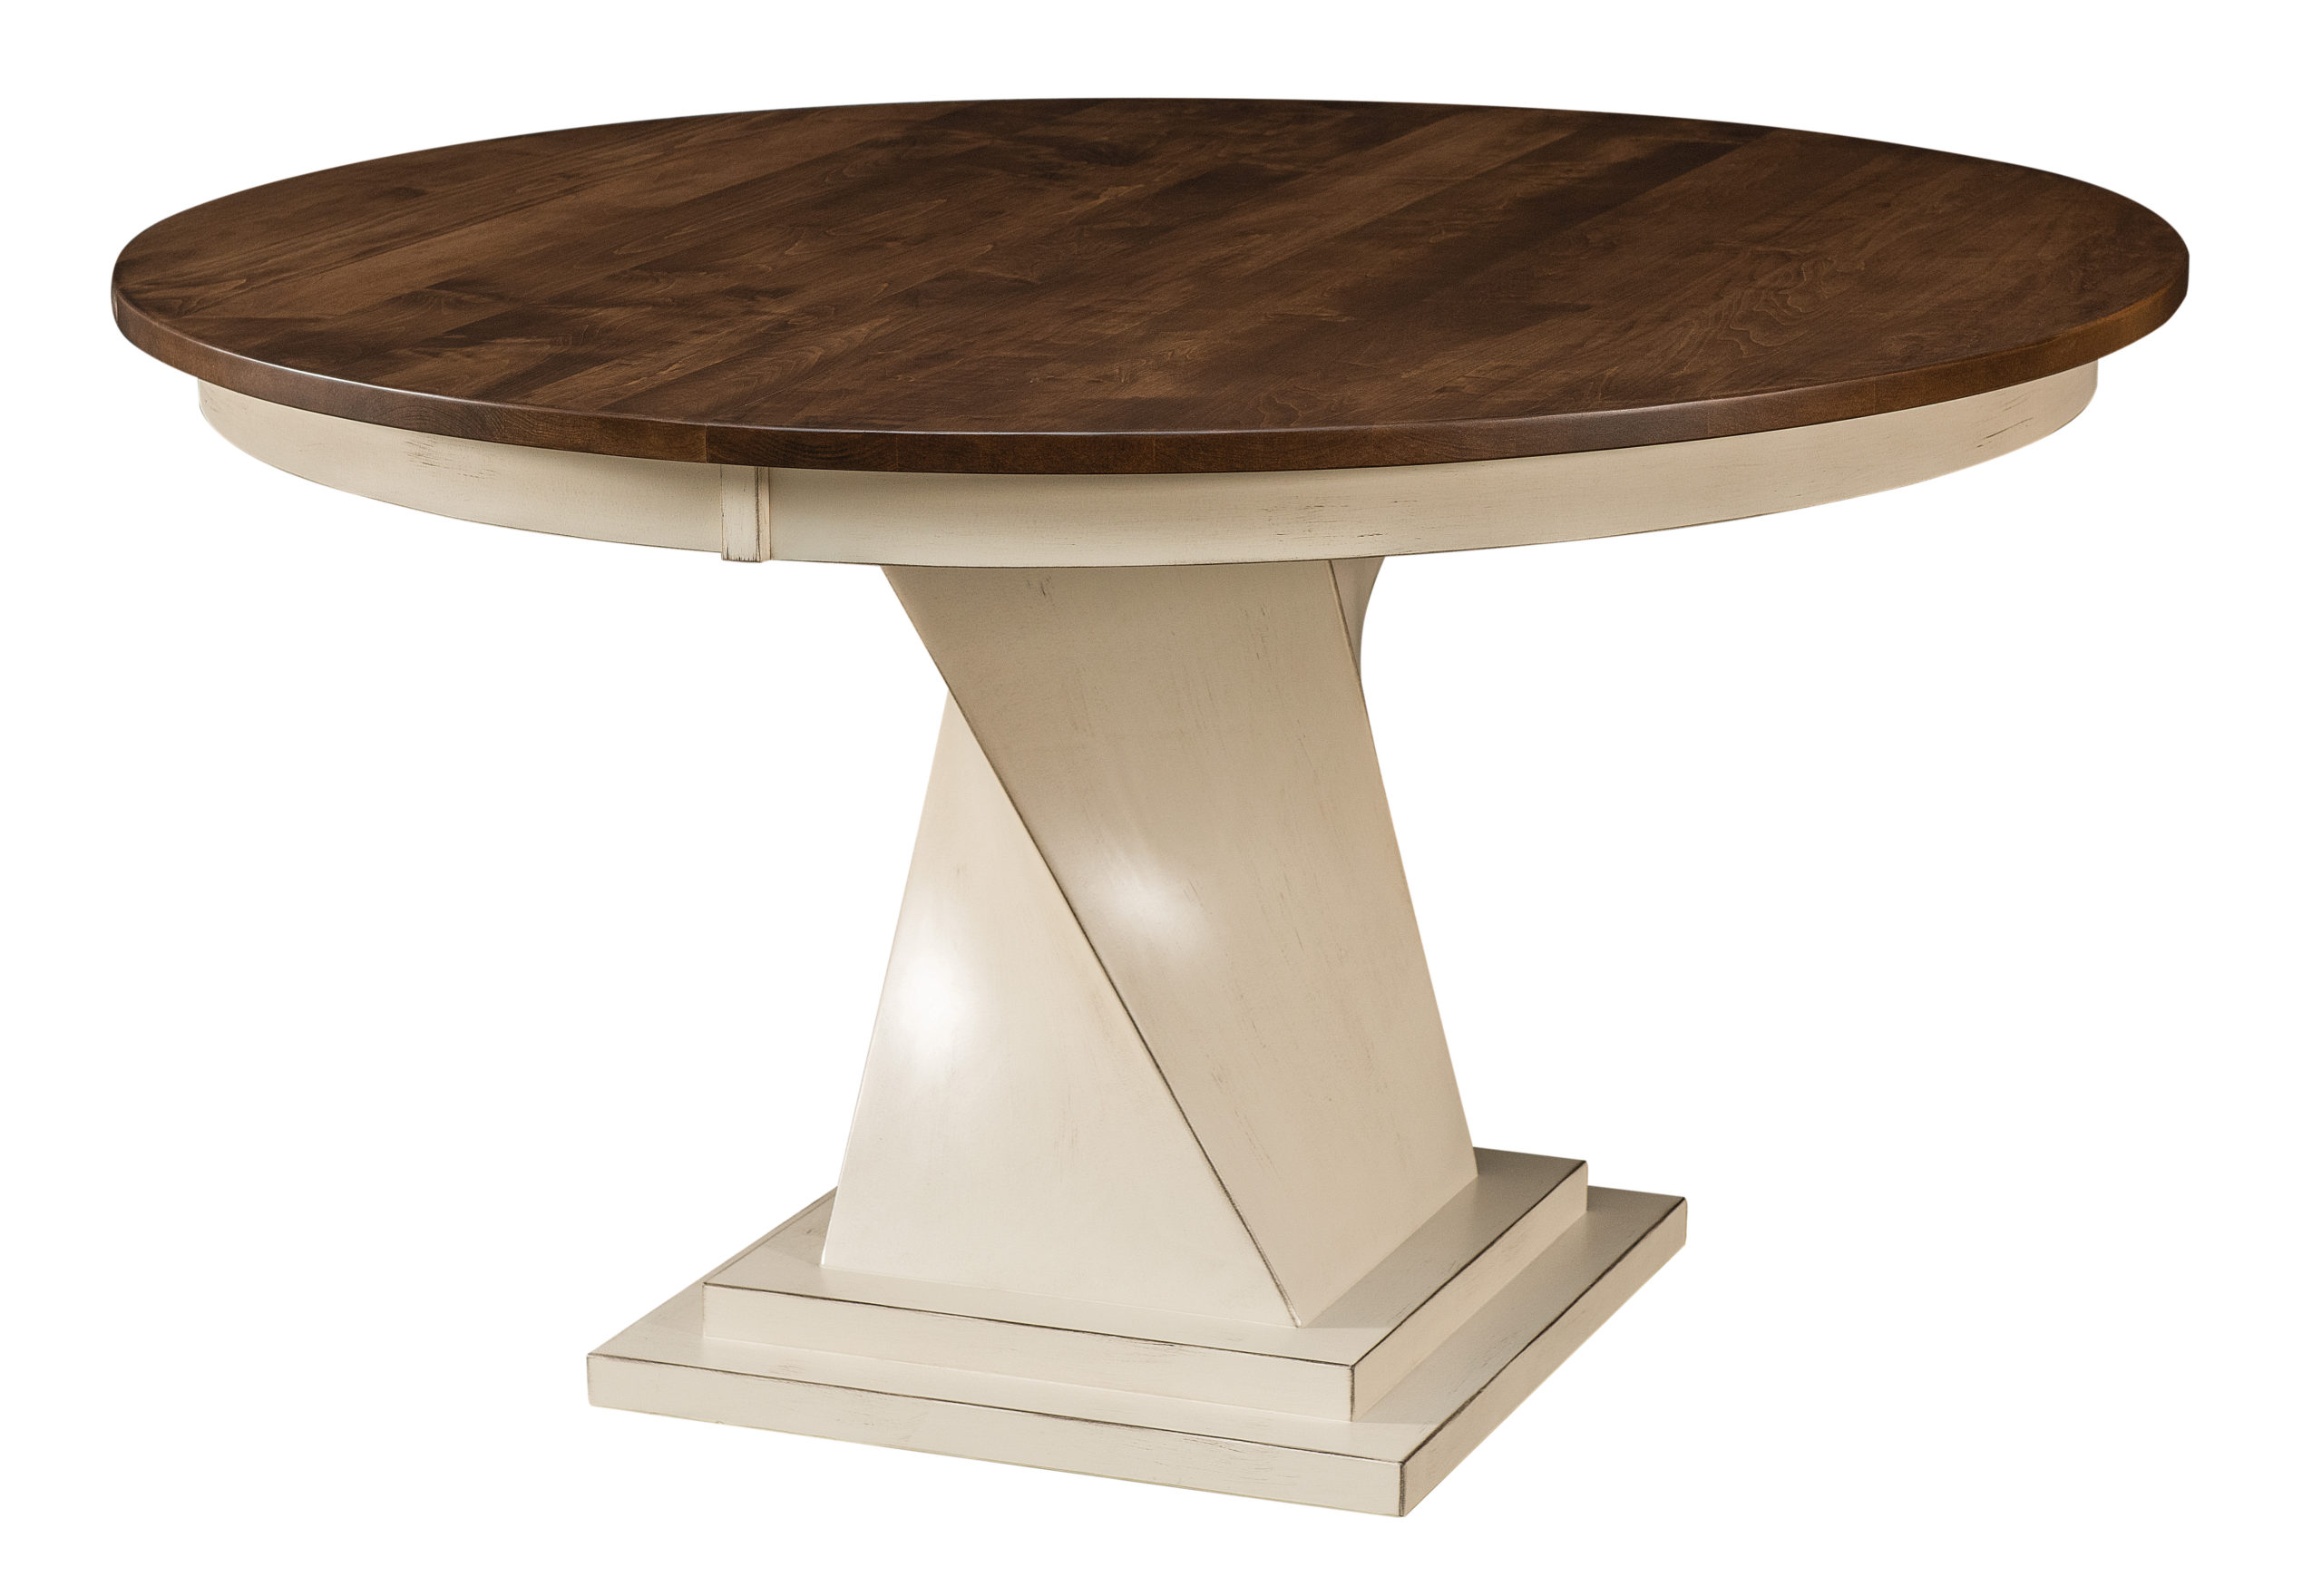 Solid Round Oak Dining Room Pedestal Table Base